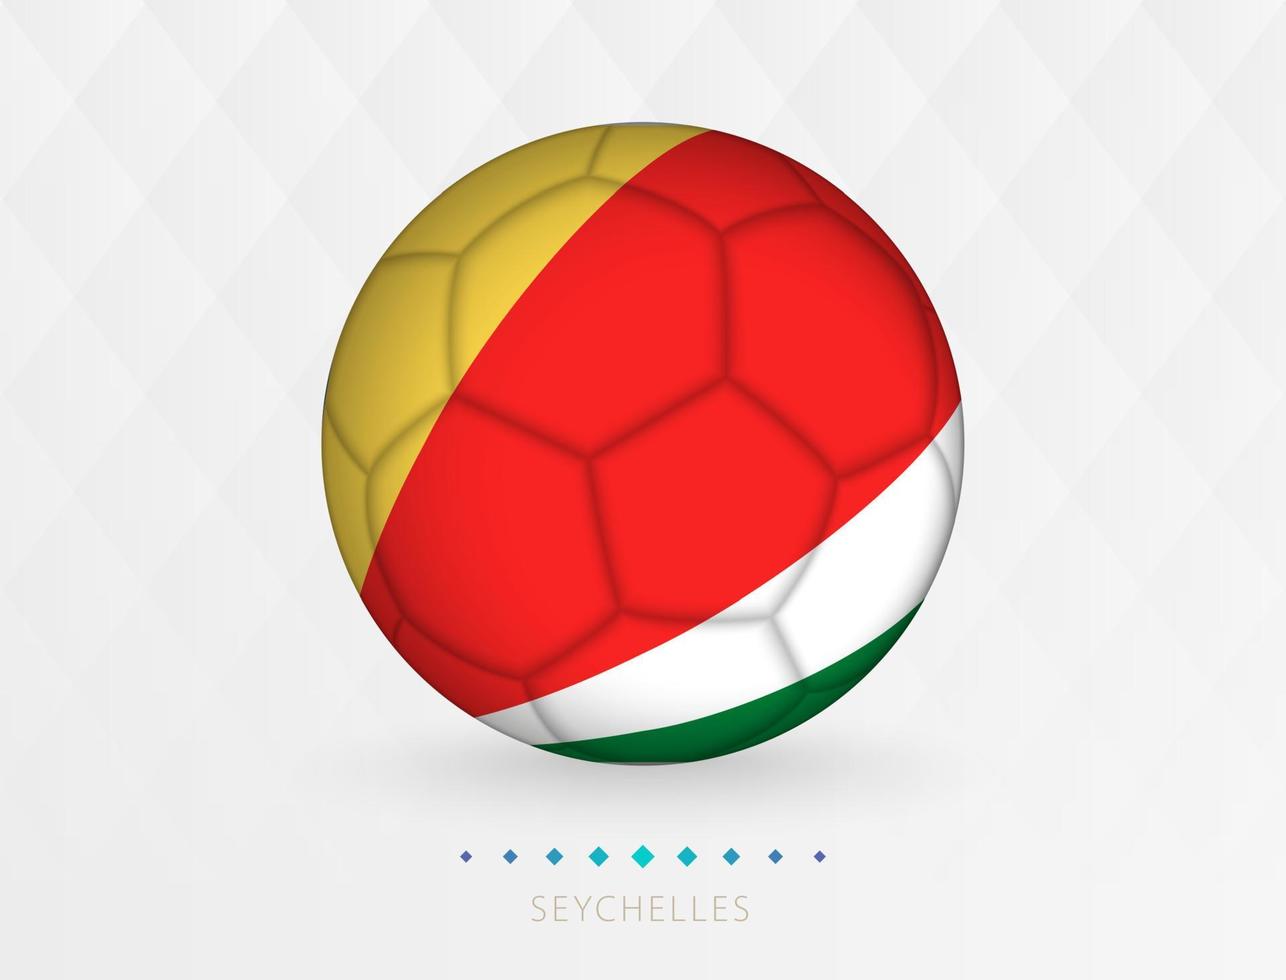 Amerikaans voetbal bal met Seychellen vlag patroon, voetbal bal met vlag van Seychellen nationaal team. vector